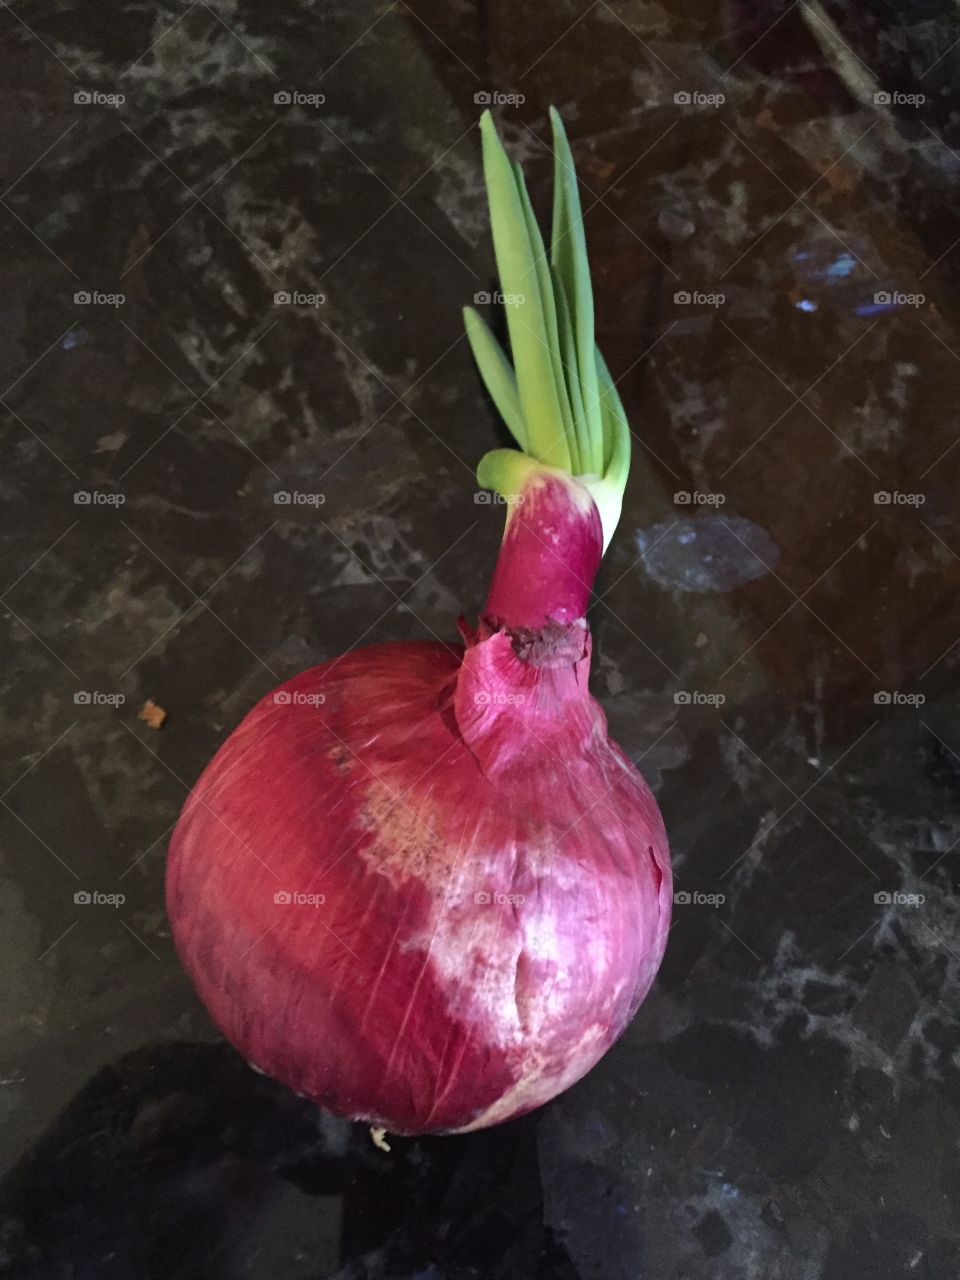 Onion with attitude